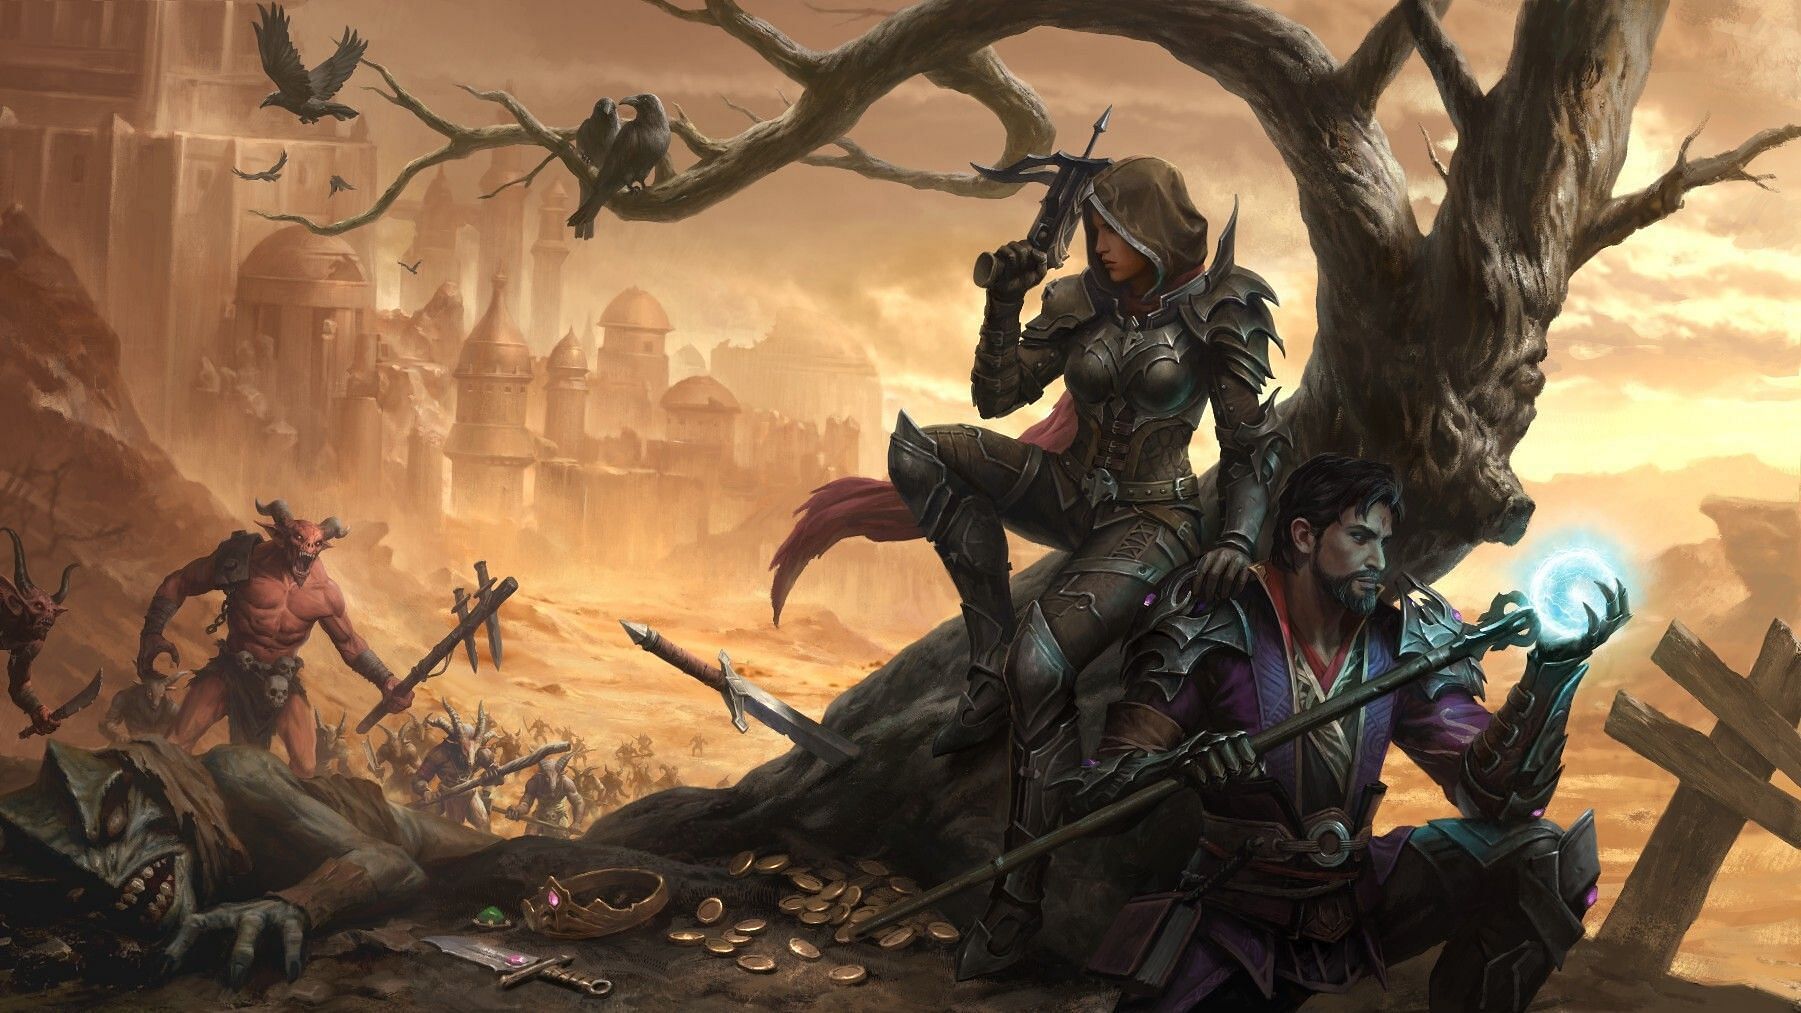 Official artwork for Diablo Immortal (Image via Blizzard Entertainment)